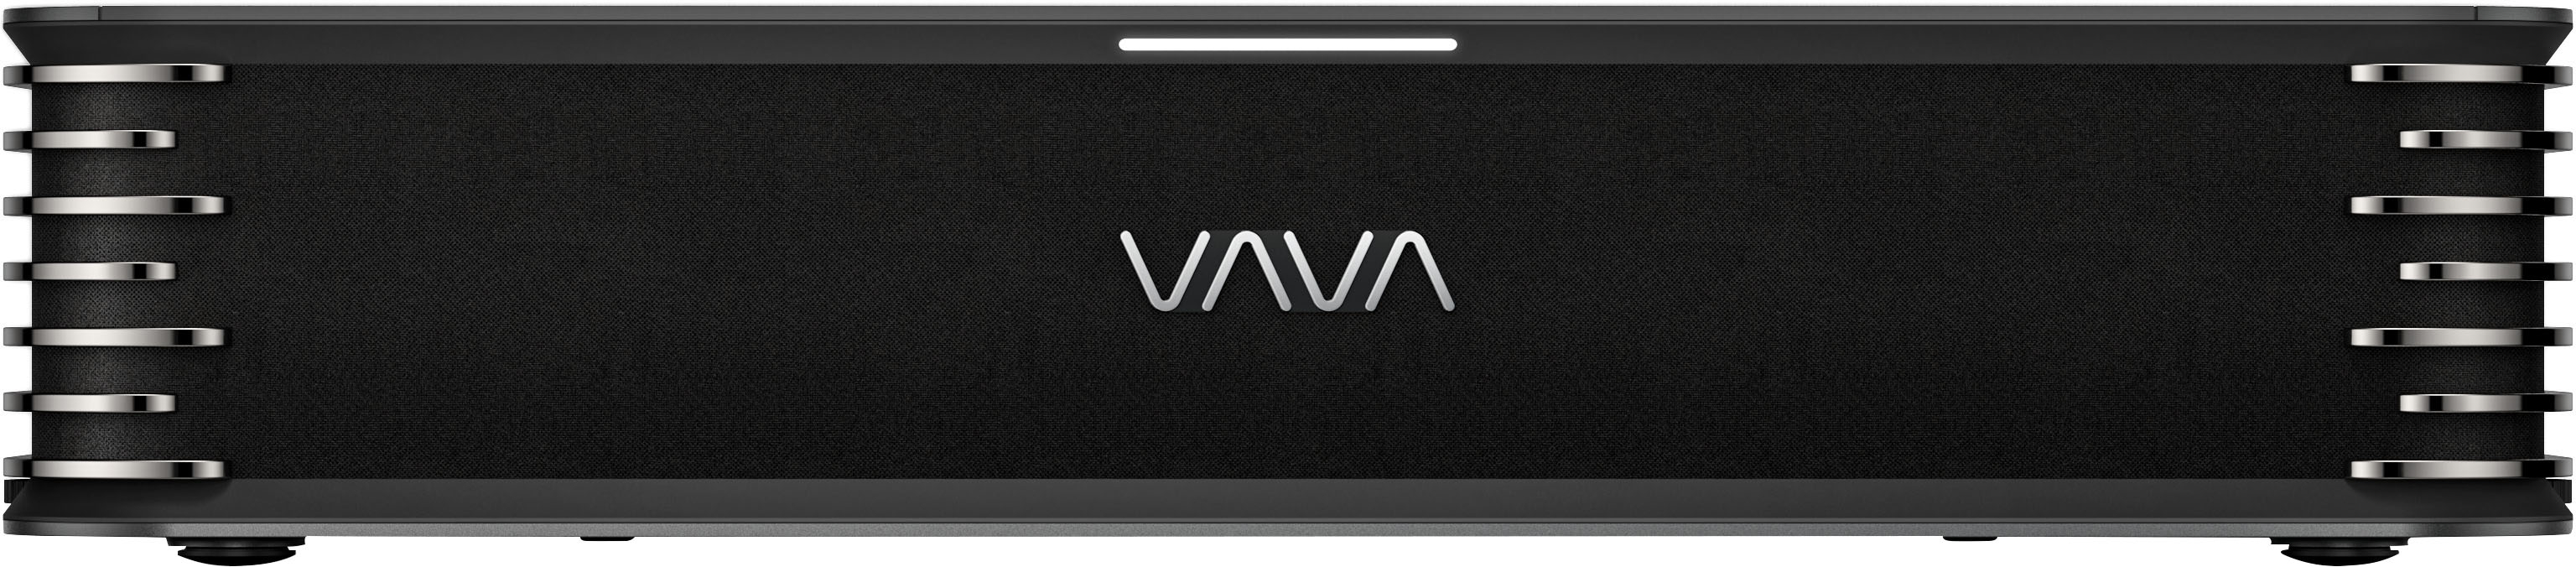 Angle View: VAVA - ALPD 4.0 Ultra Short Throw Triple Laser Chroma Projector - Black